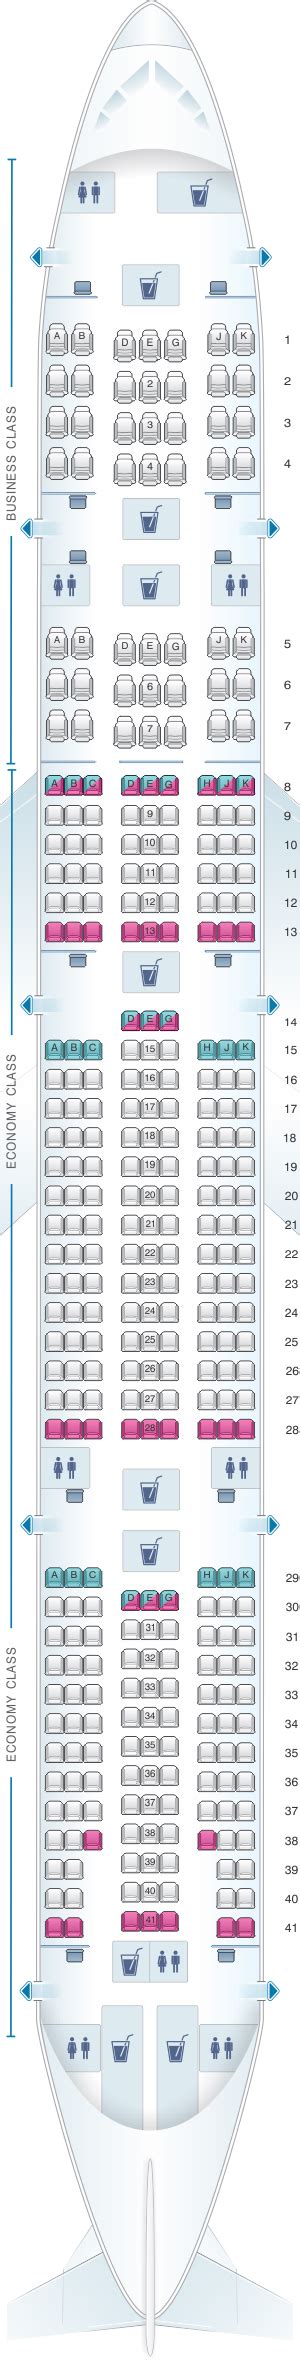 Seat Map Turkish Airlines Boeing B Er Seatmaestro